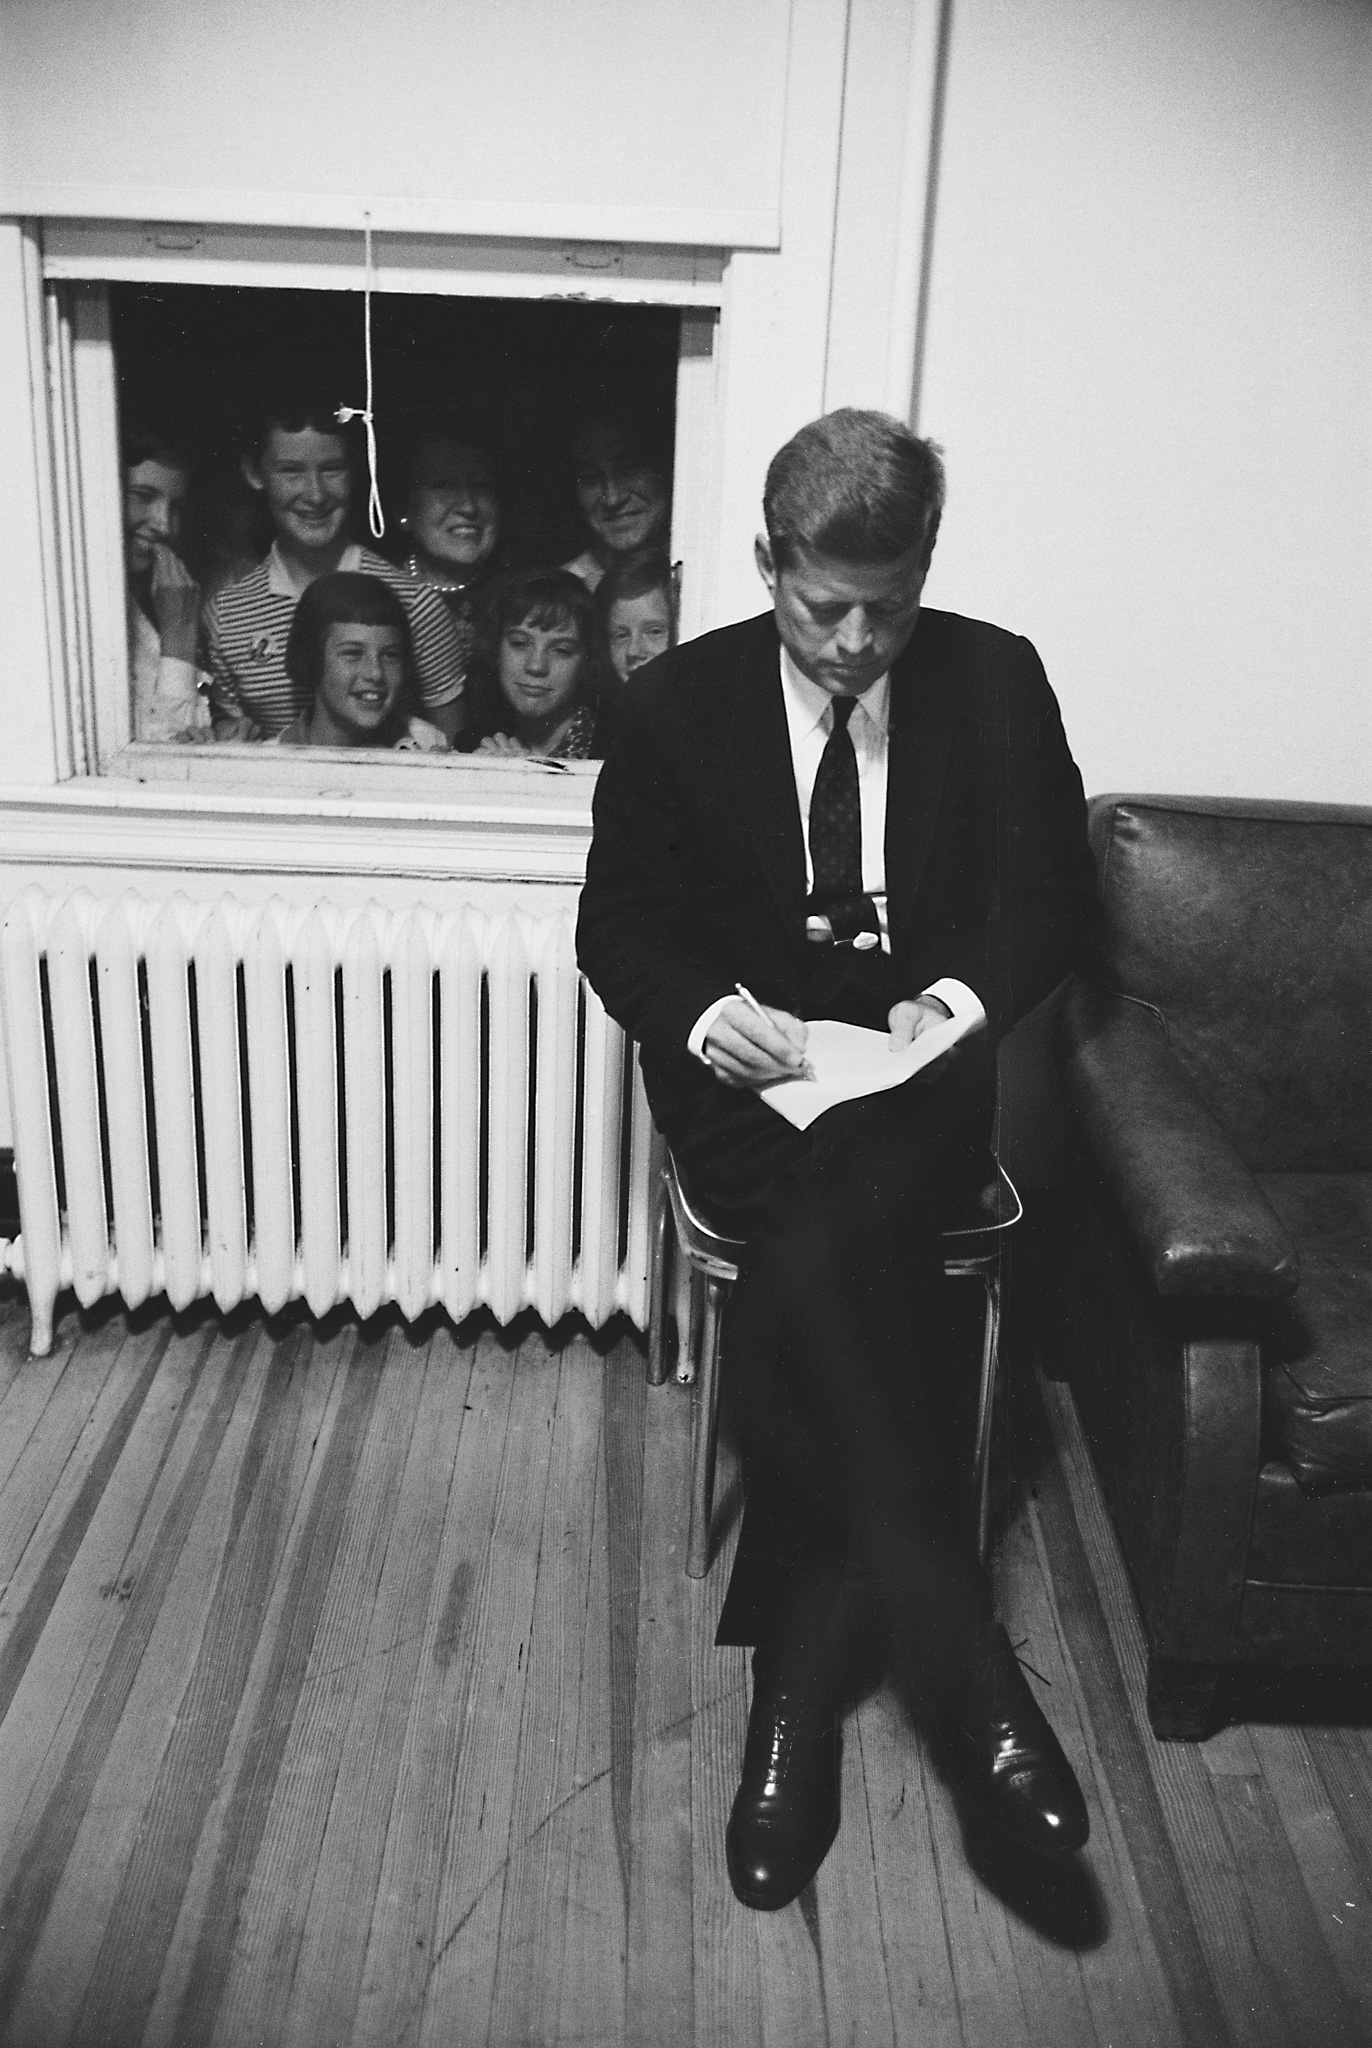 John F. Kennedy prepares a speech as admirers watch from outside a window, Baltimore, September 1960.